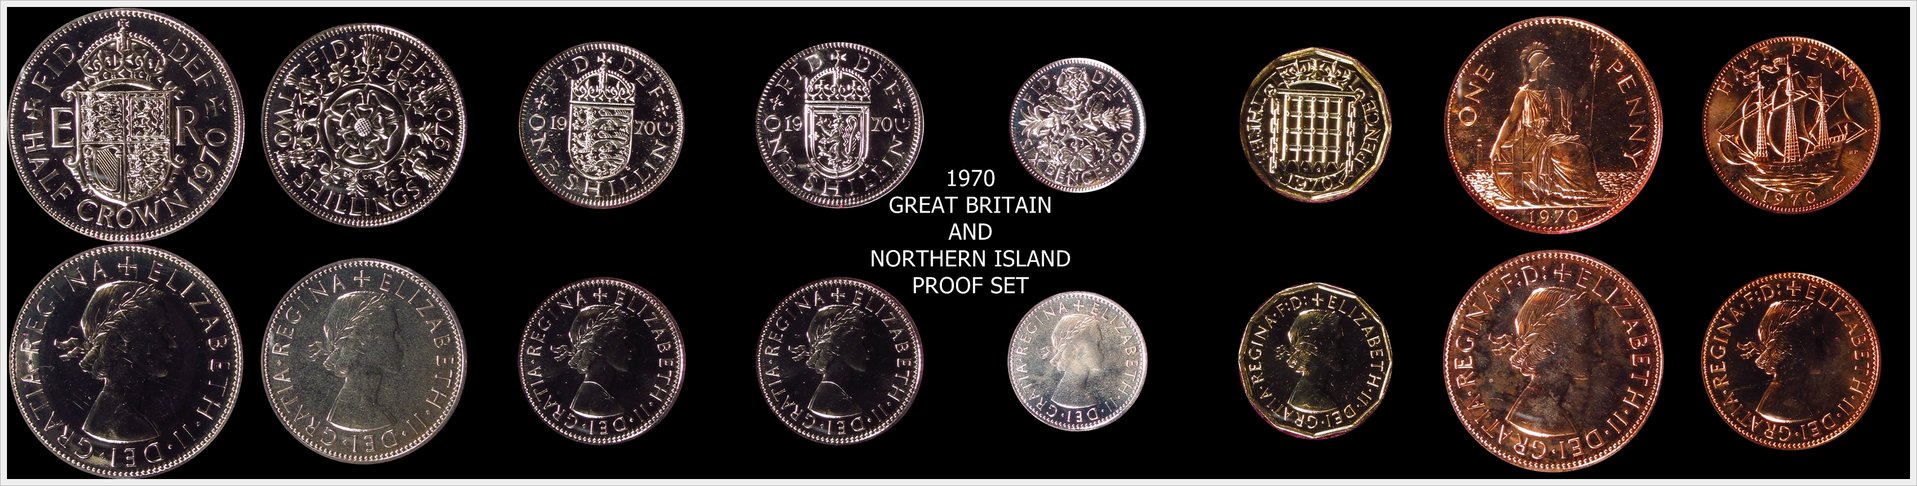 1970 gb and ireland proof set.jpg